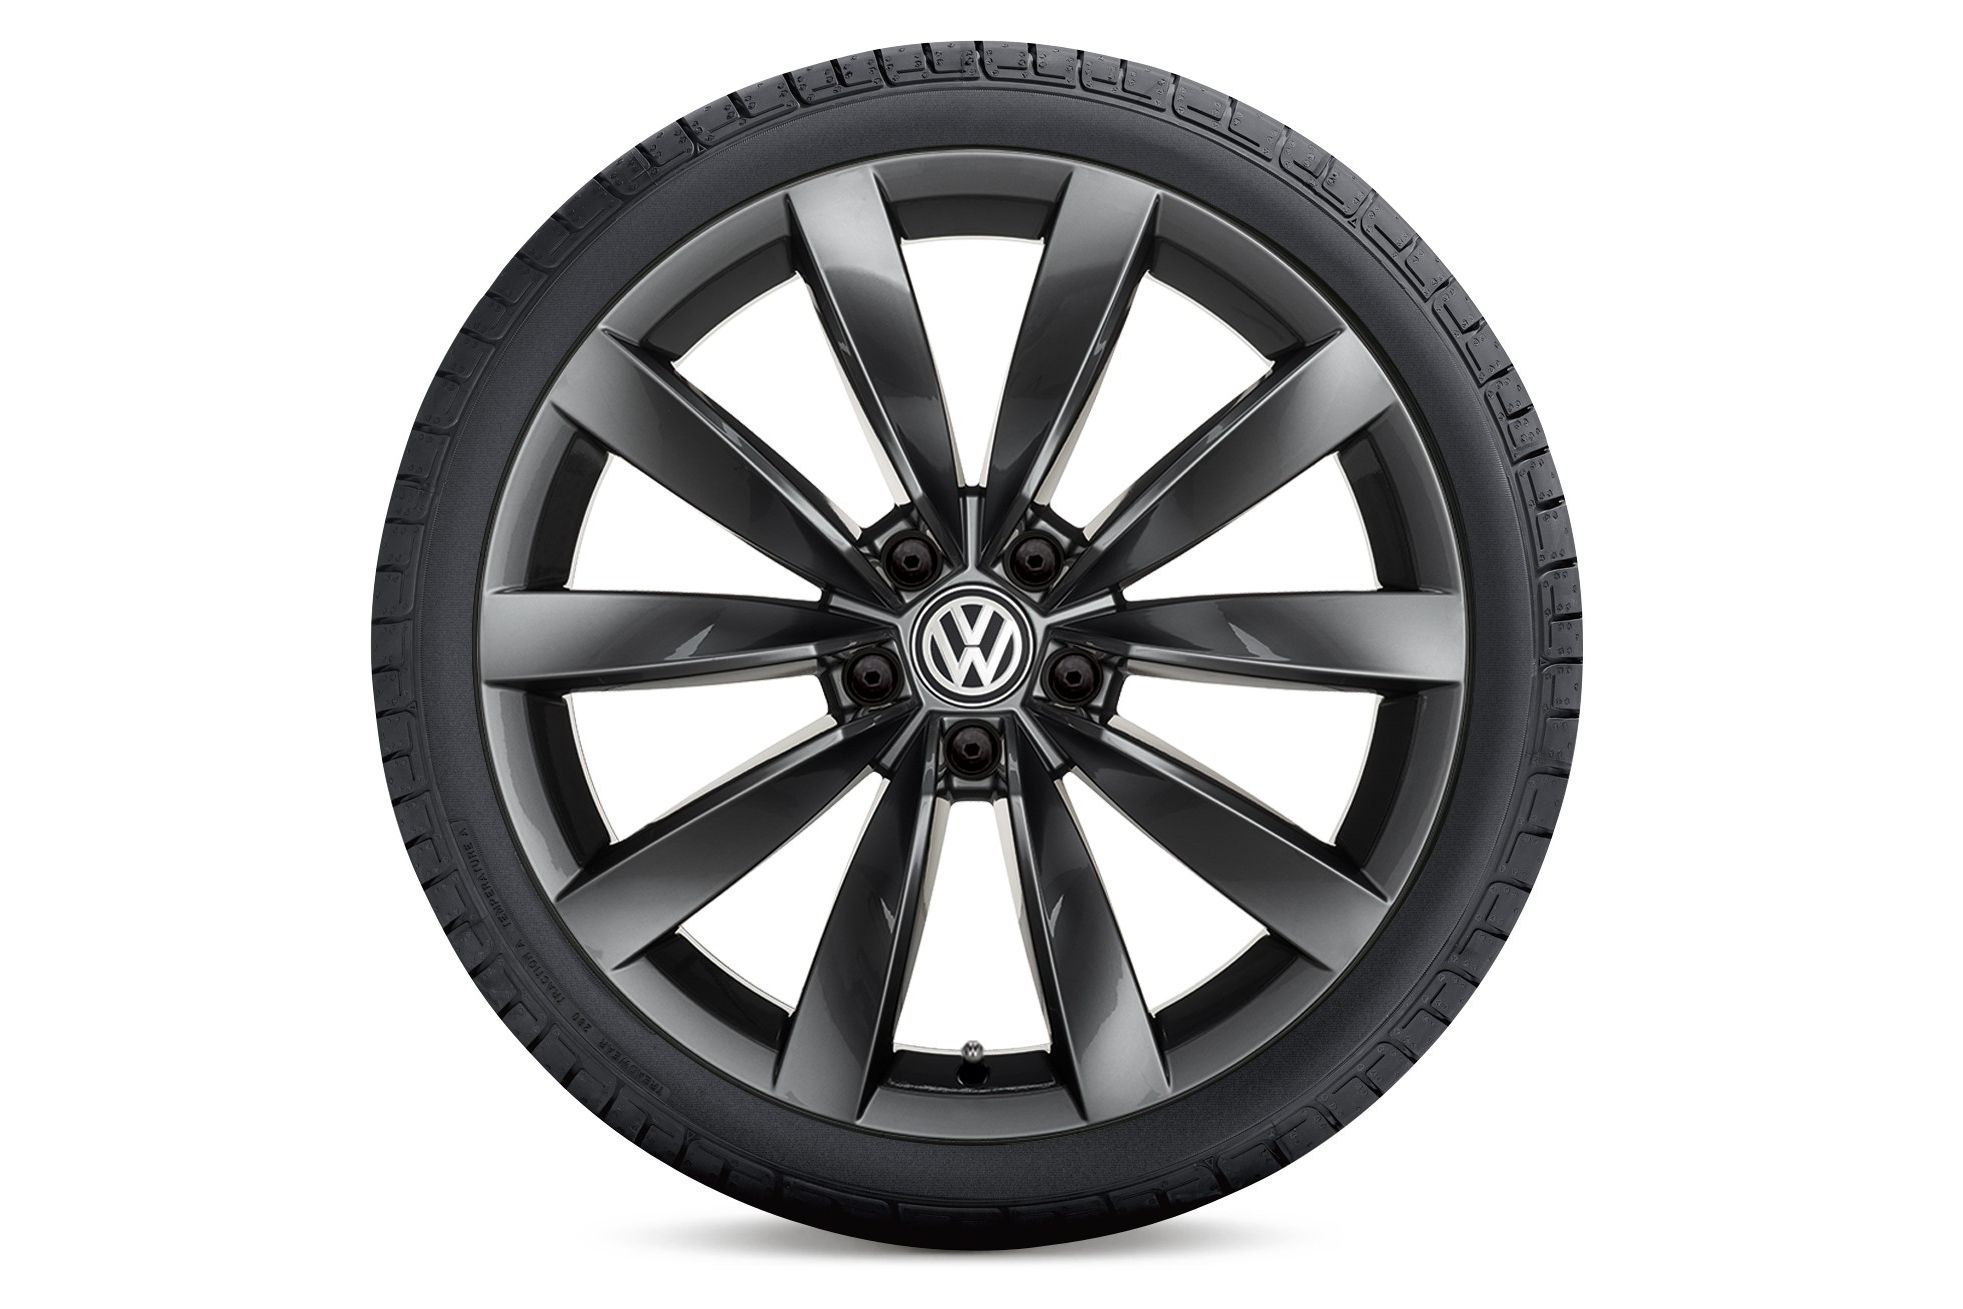 VW Volkswagen Chennai Winterkomplettrad